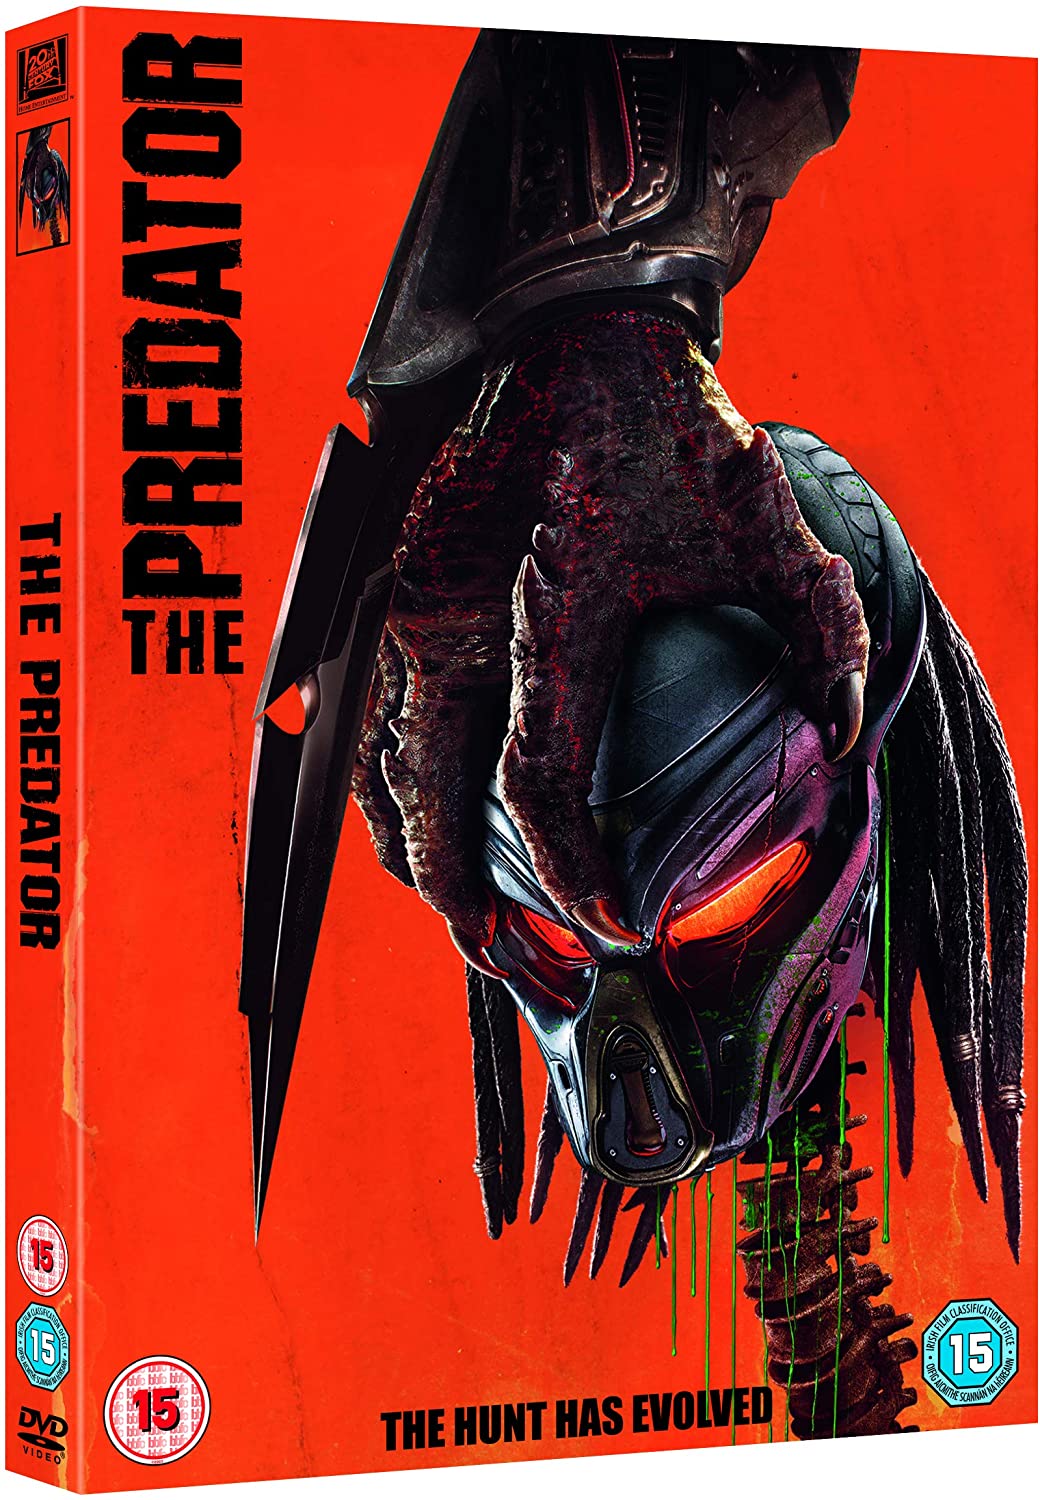 The Predator [2018] - Sci-fi/Action [DVD]